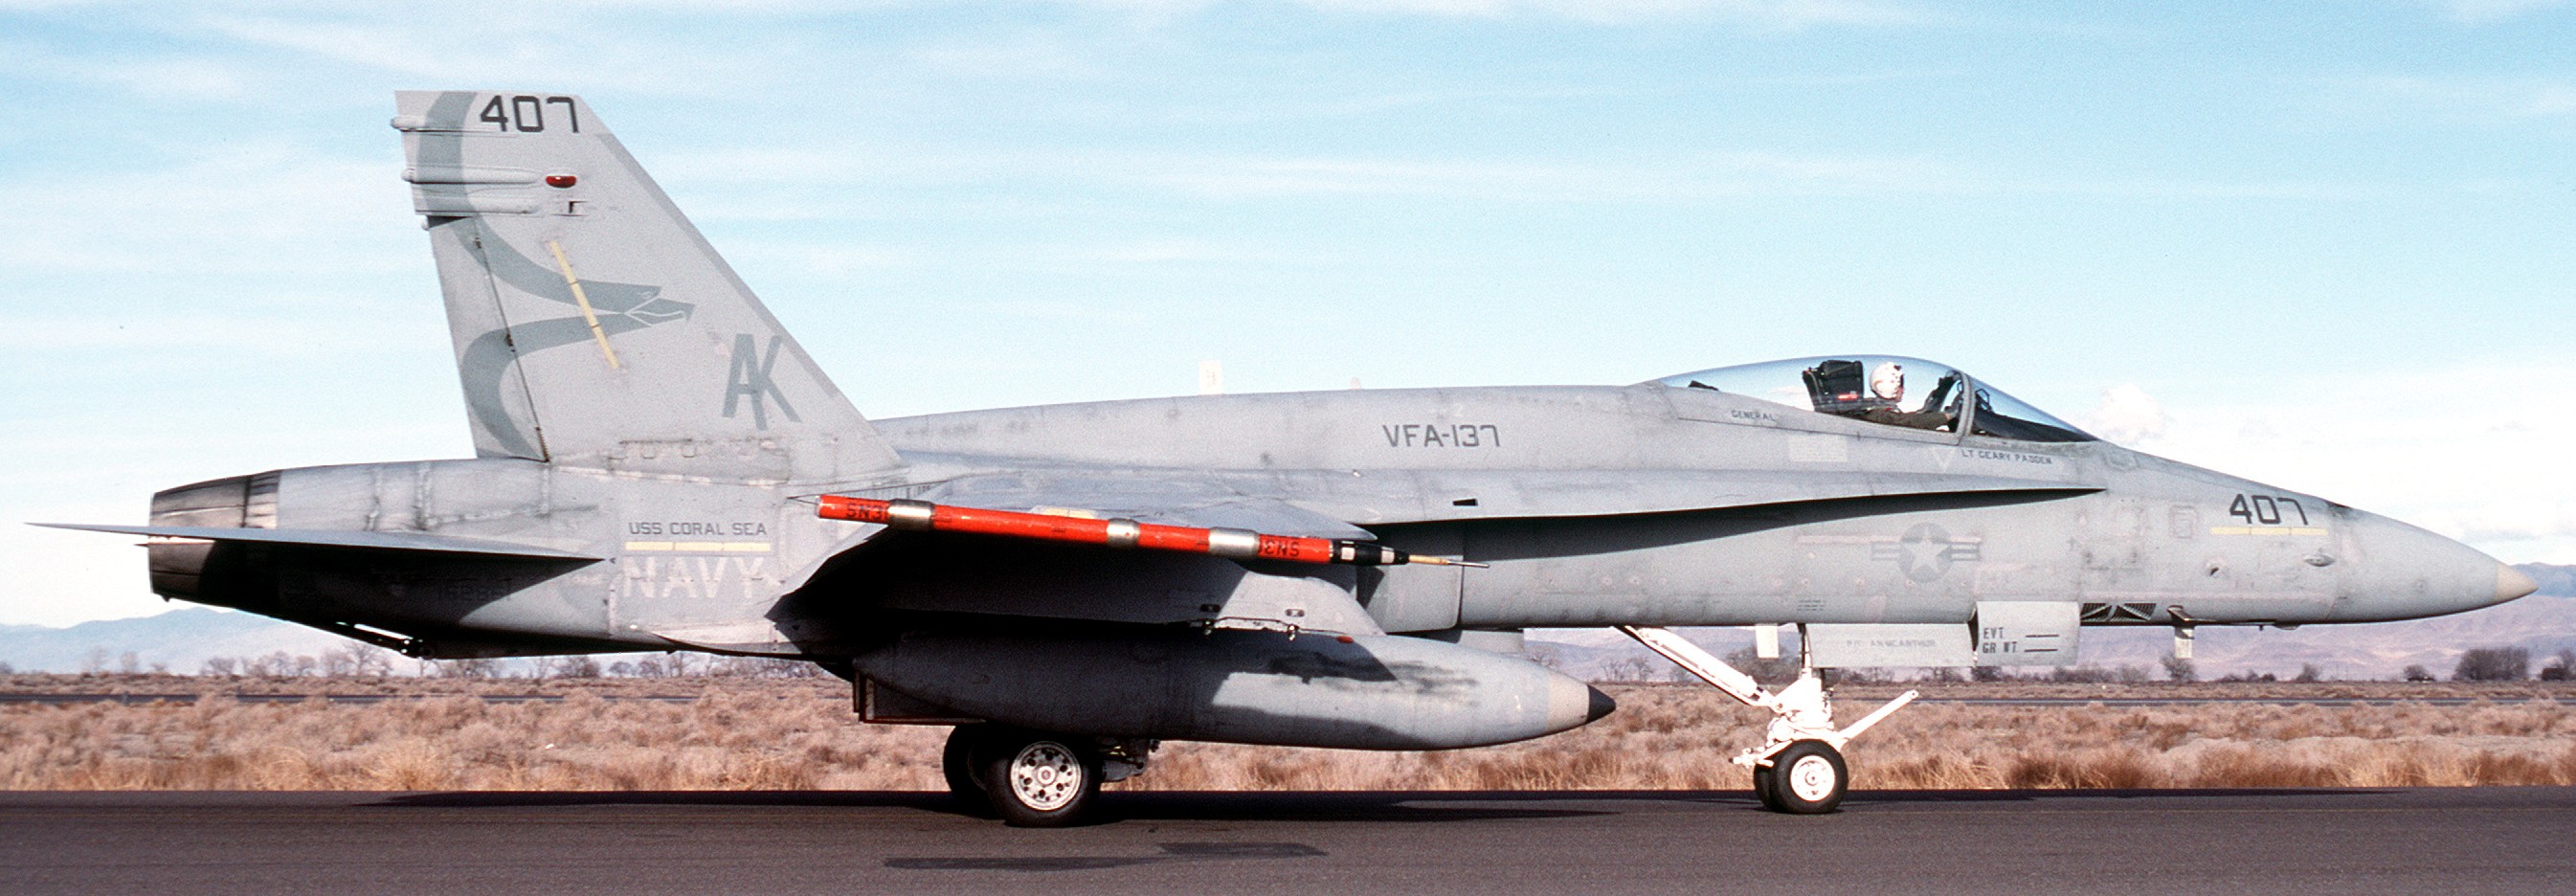 vfa-137 kestrels strike fighter squadron f/a-18a hornet carrier air wing cvw-13 nas fallon nevada 1987 72